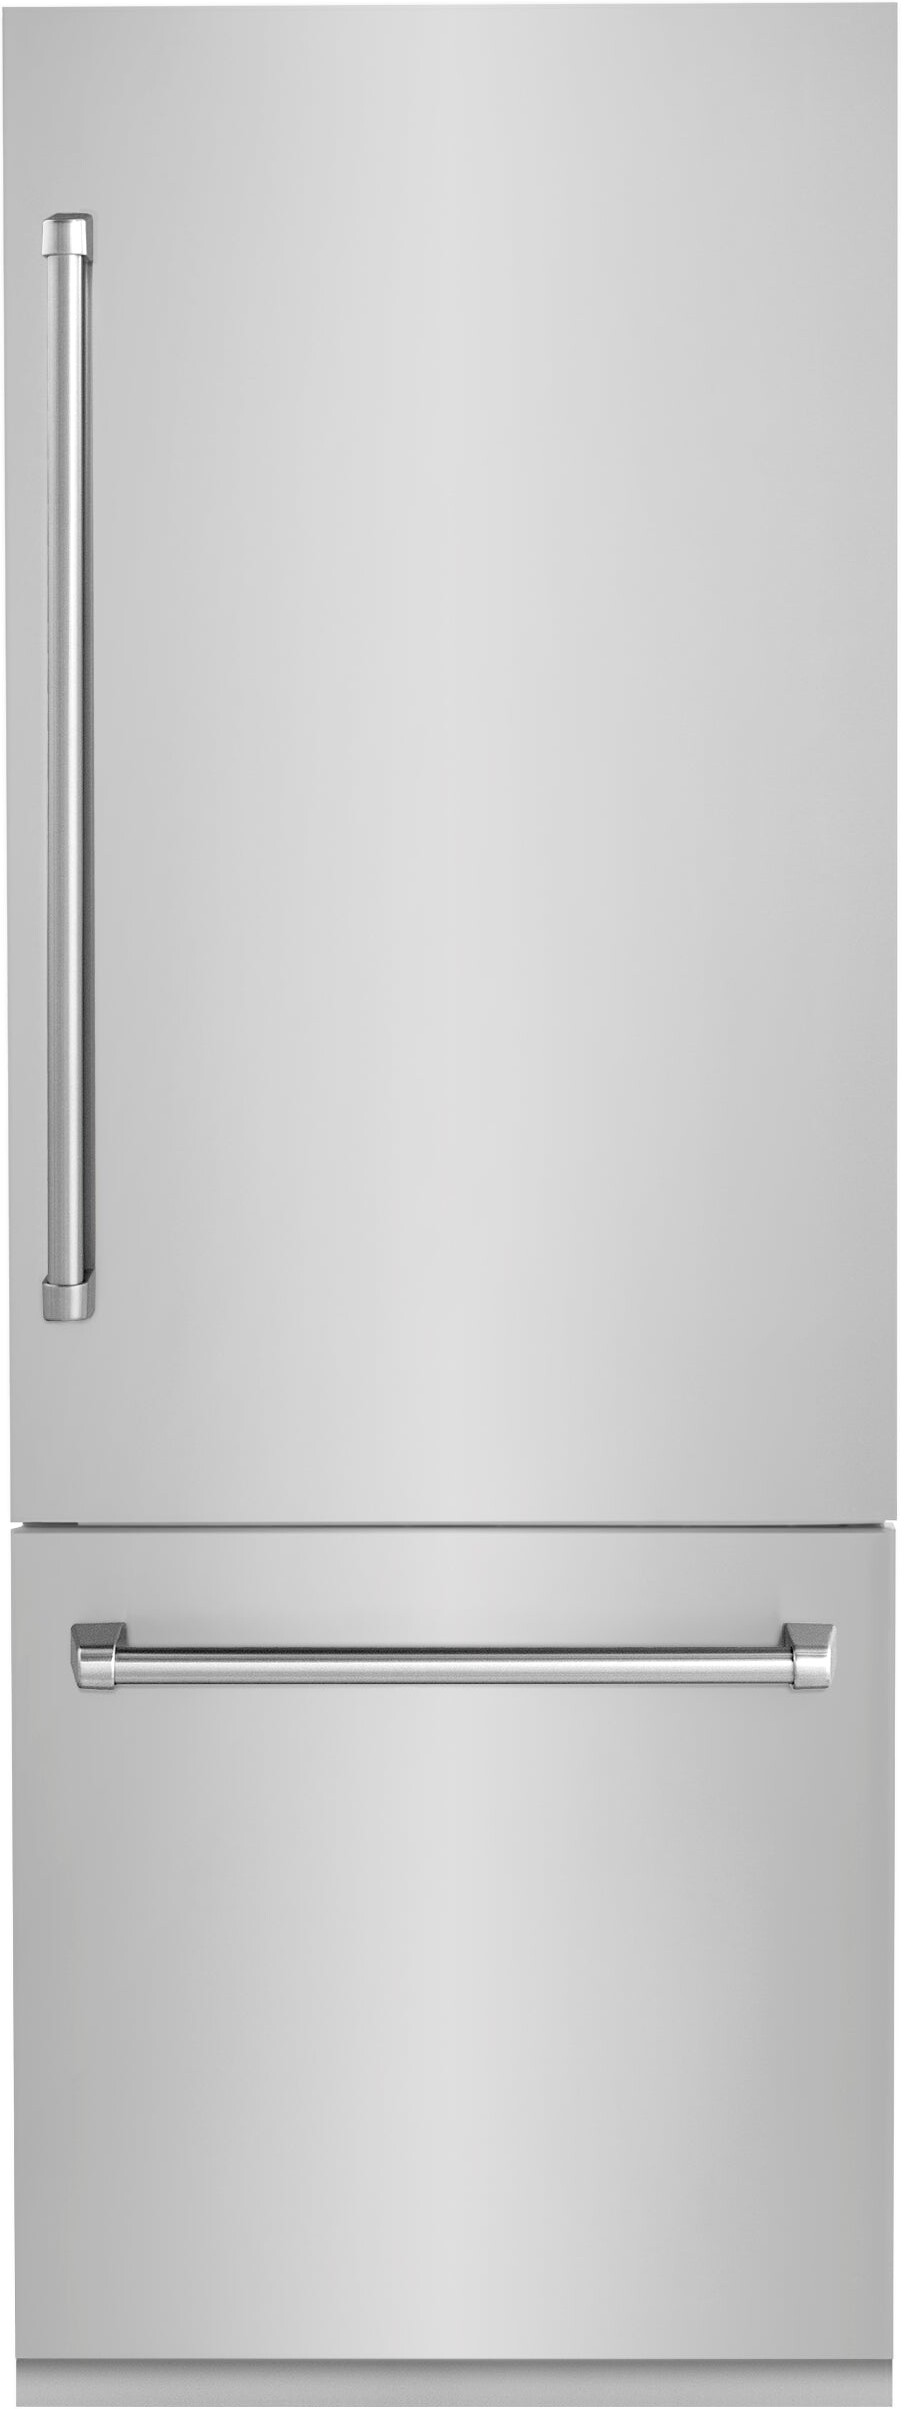 ZLINE 30 Inch 30"" Built In Bottom Freezer Refrigerator RBIV30430 -  RBIV-304-30